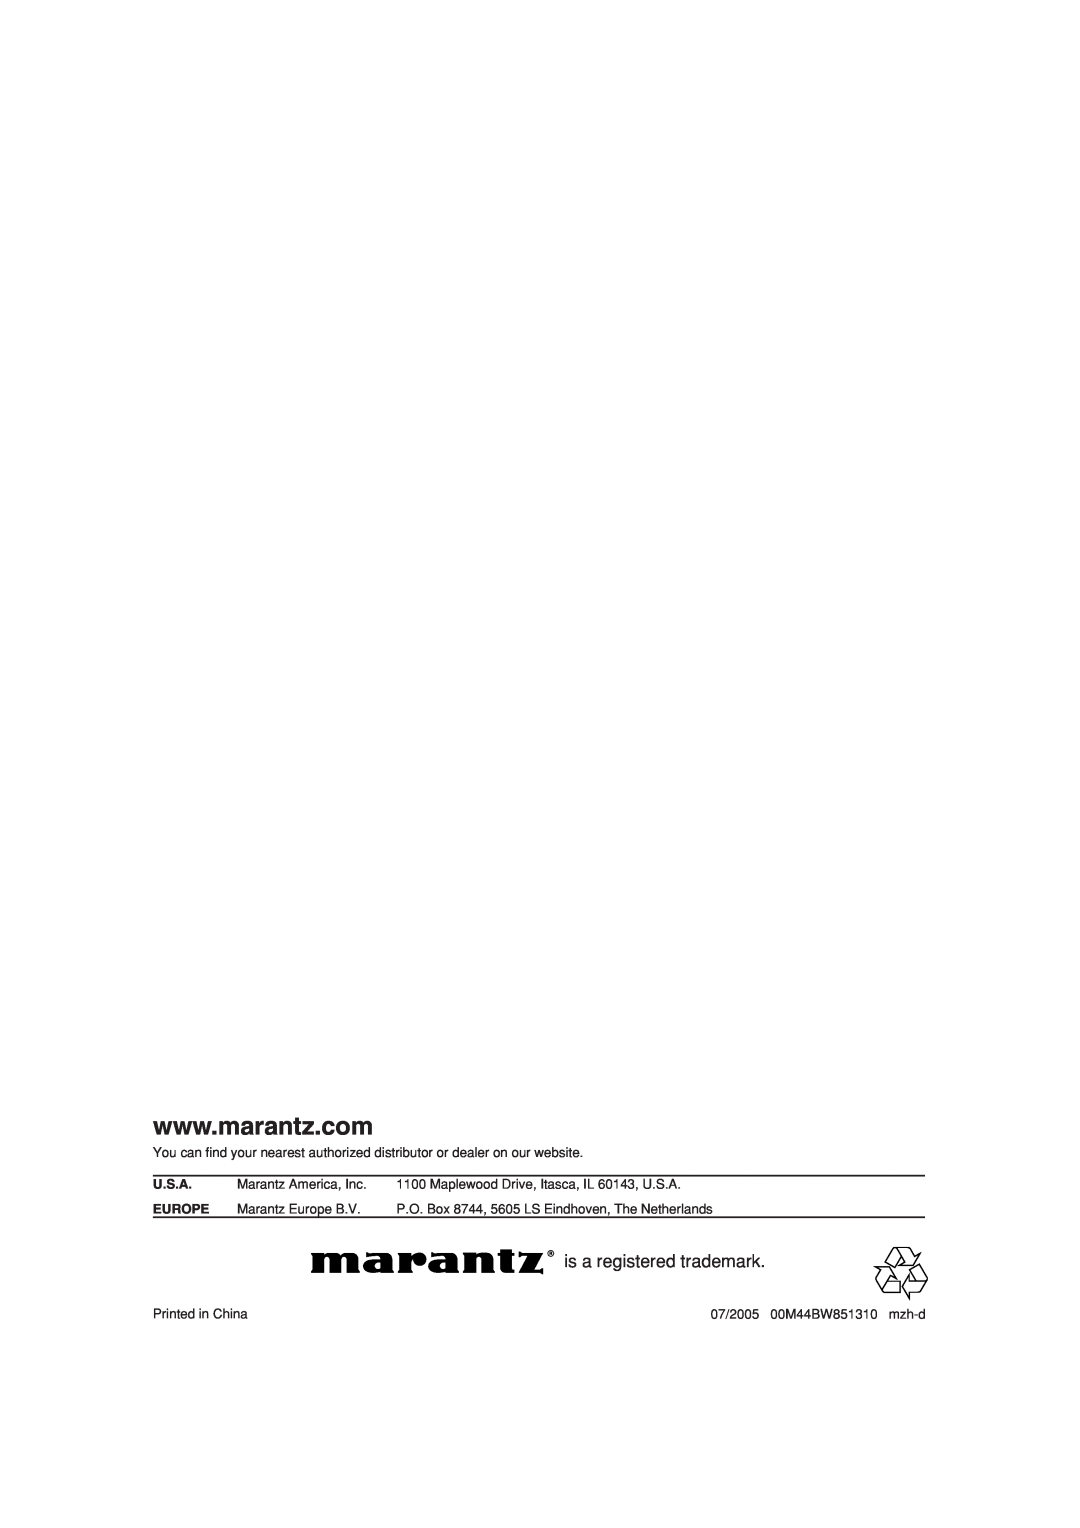 Marantz PM4001OSE manual is a registered trademark, U.S.A, Europe 